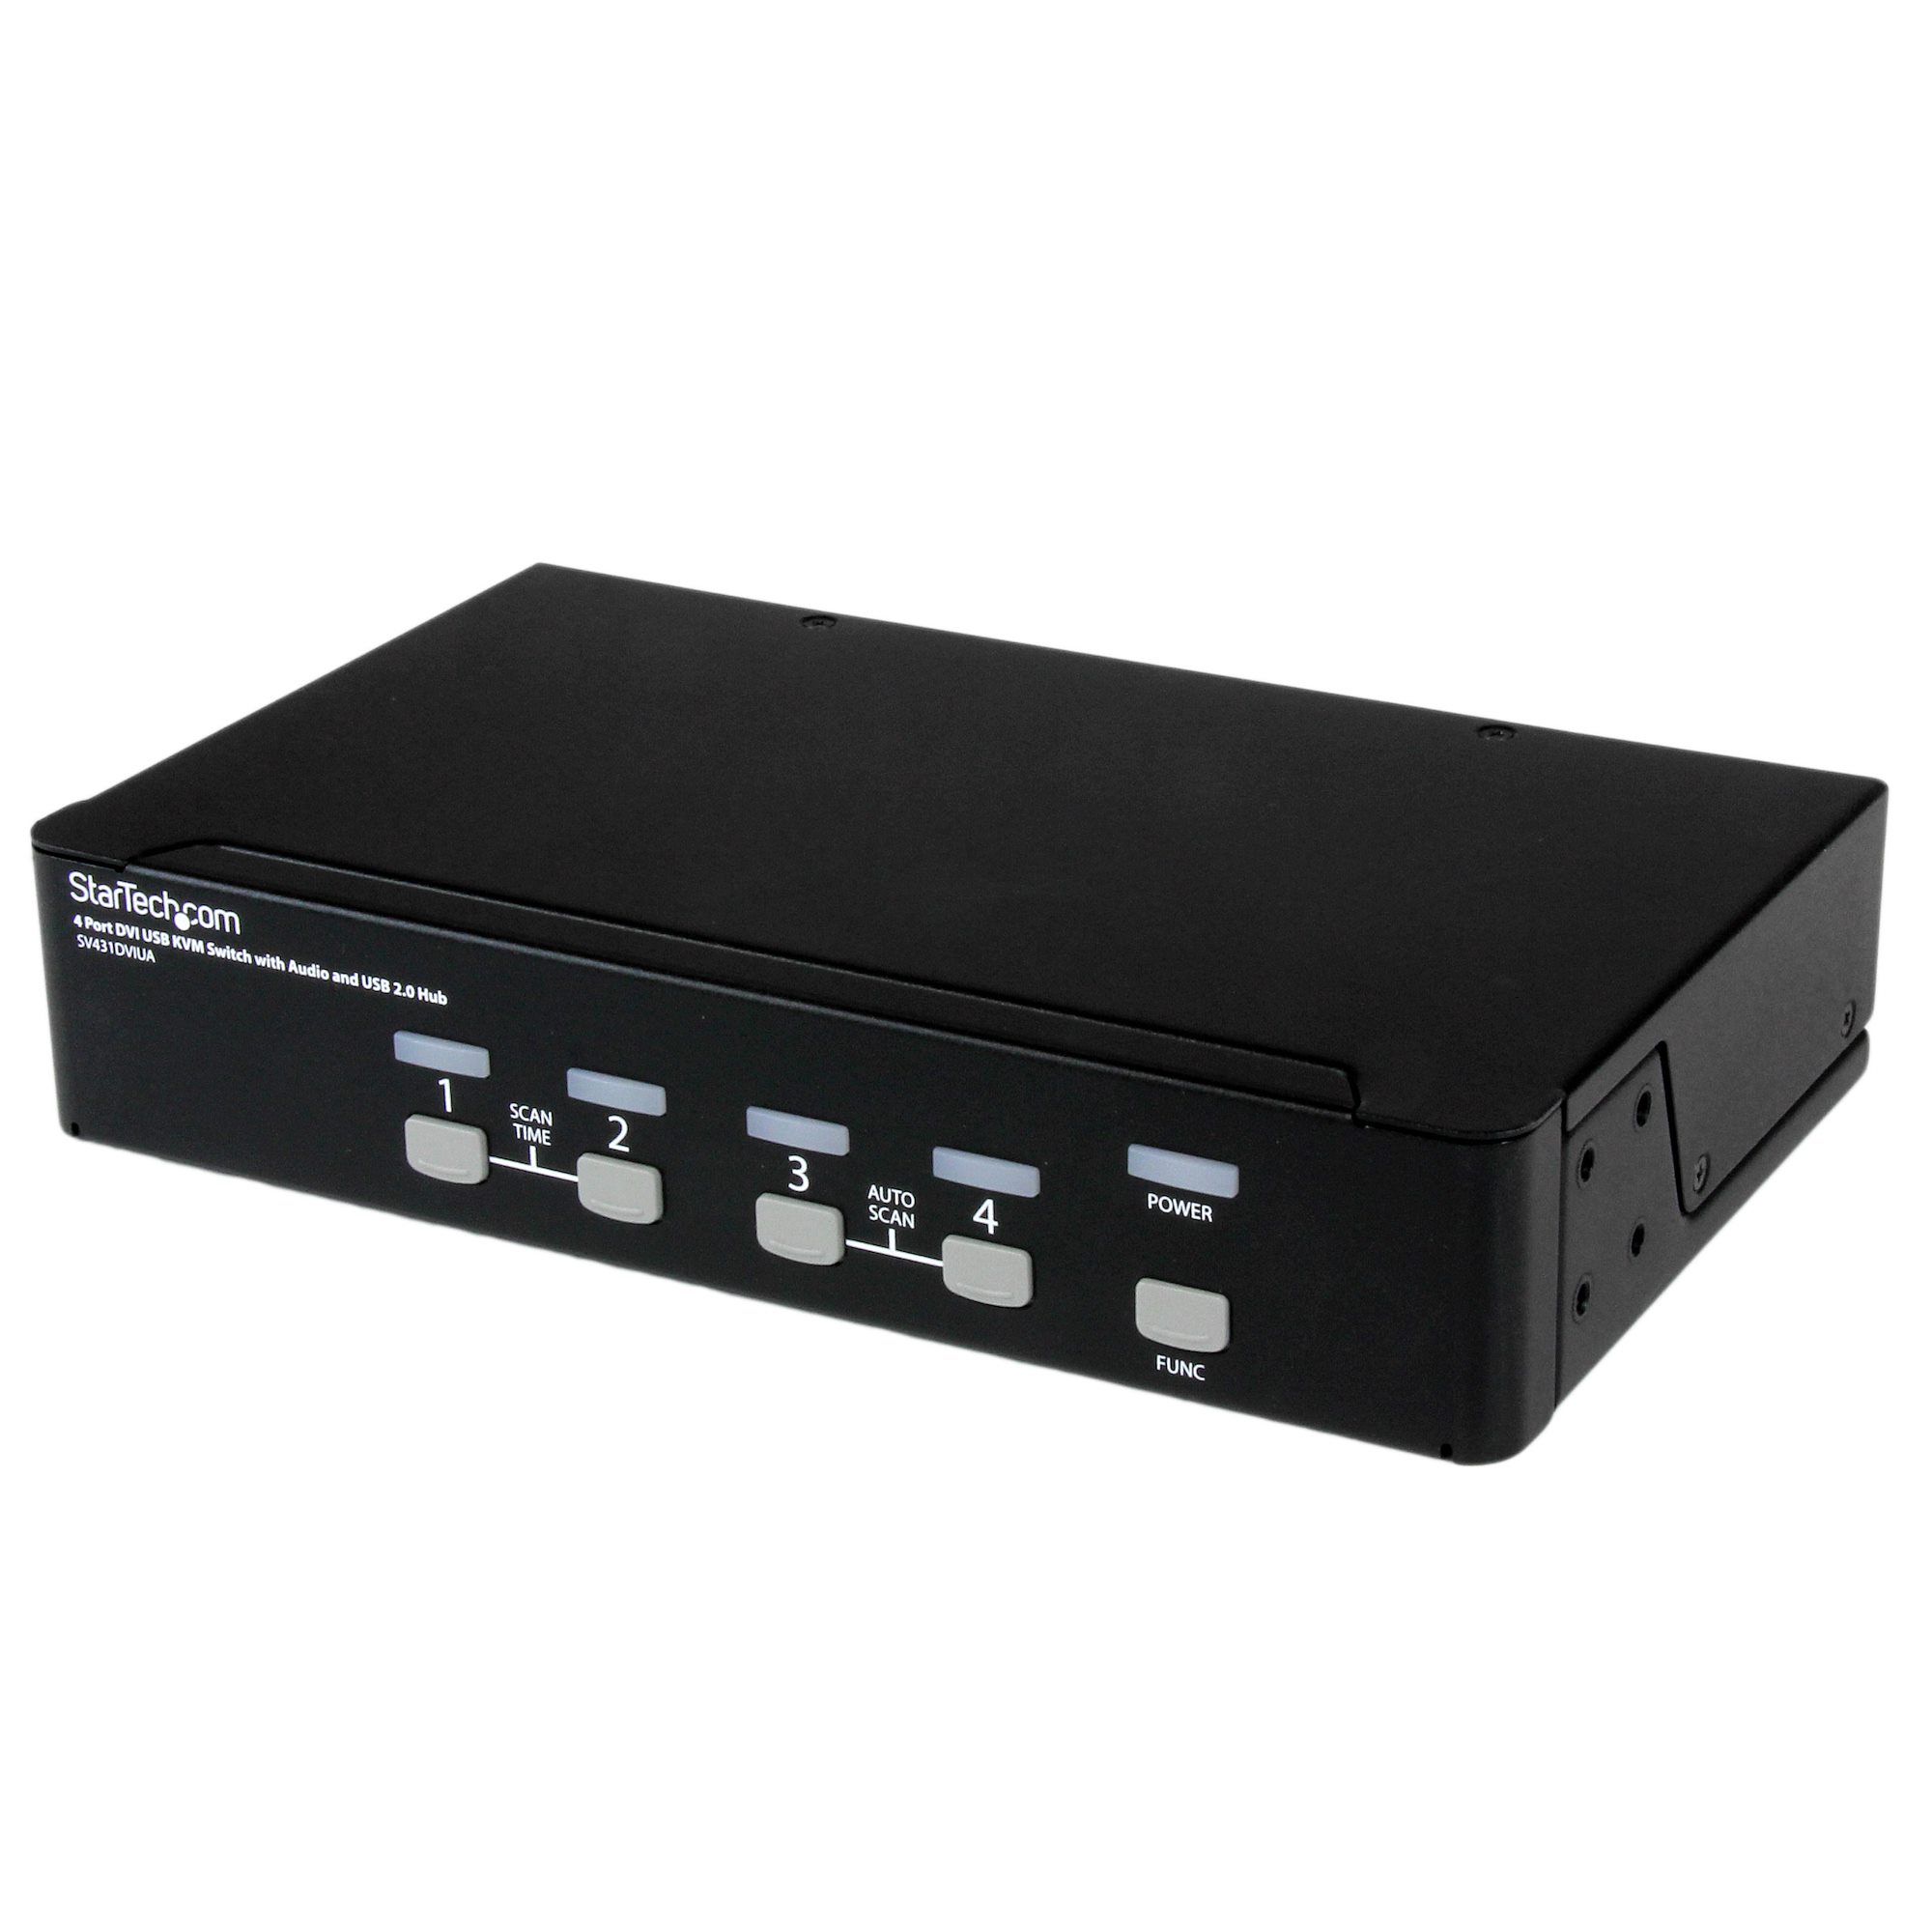 4 Port DVI USB KVM Switch with Audio and USB 2.0 Hub